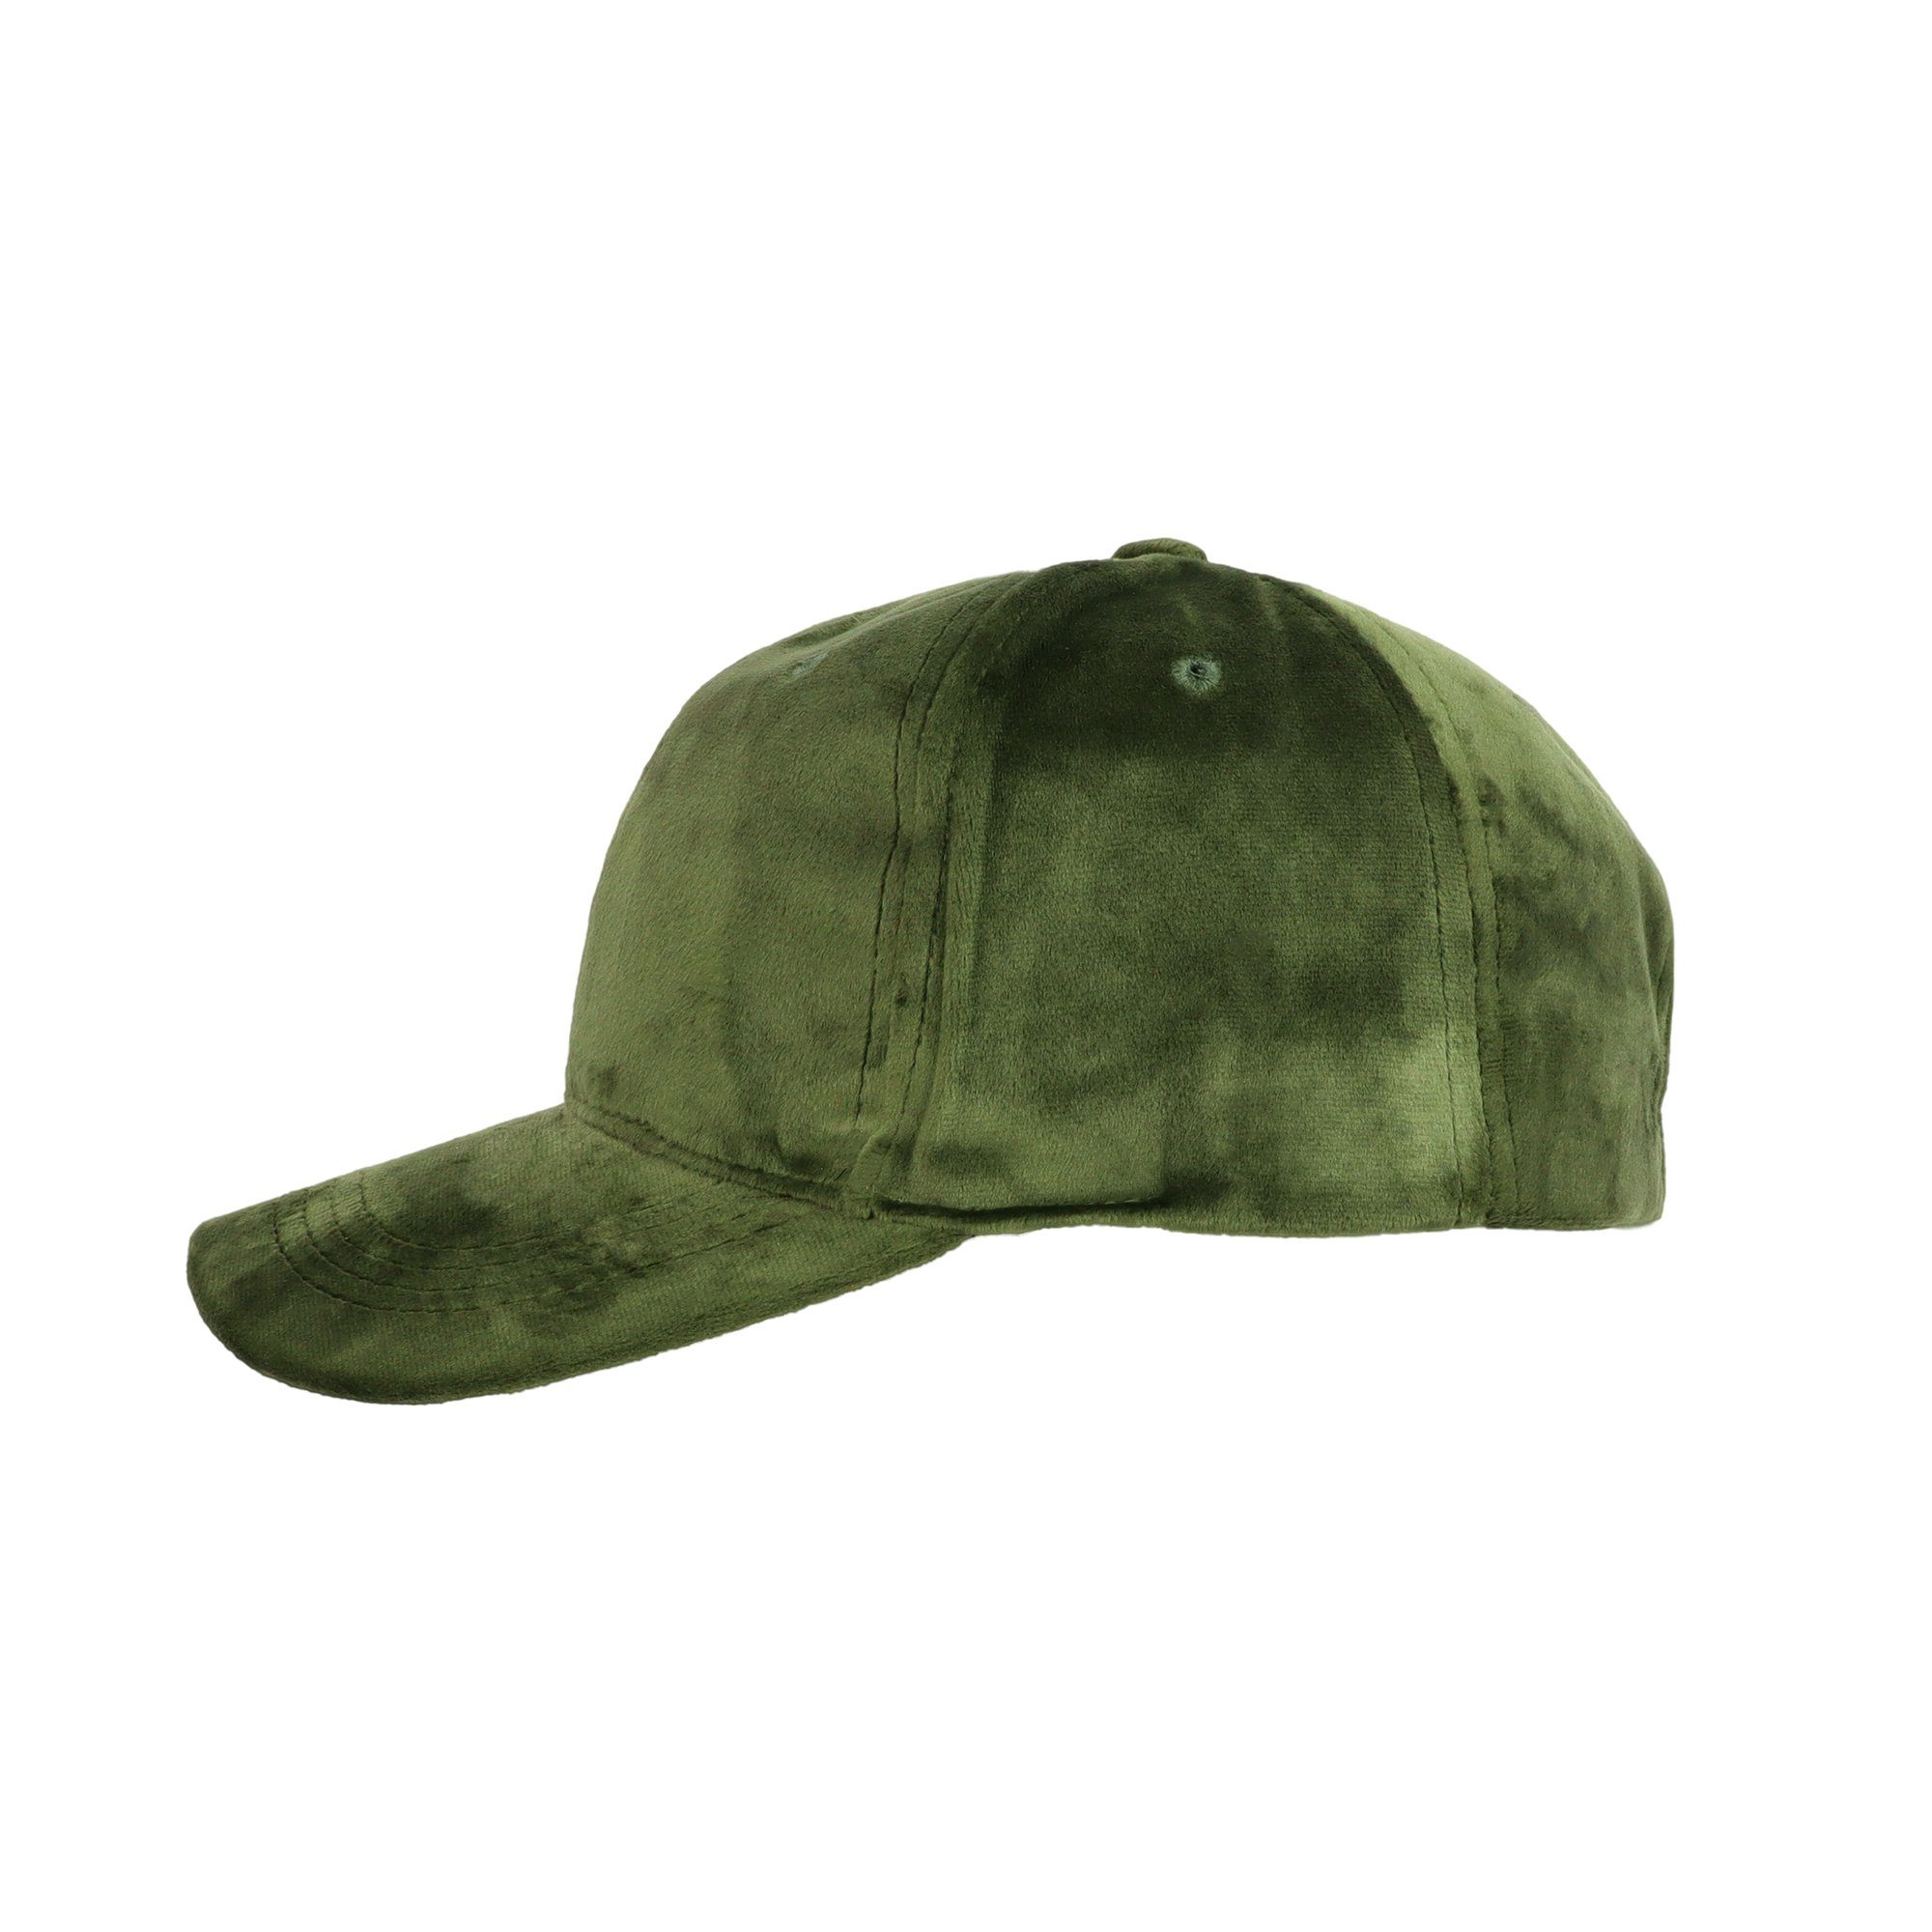 ZEBRO Baseball Samt-Cap mit Belüftungslöchern grün Cap